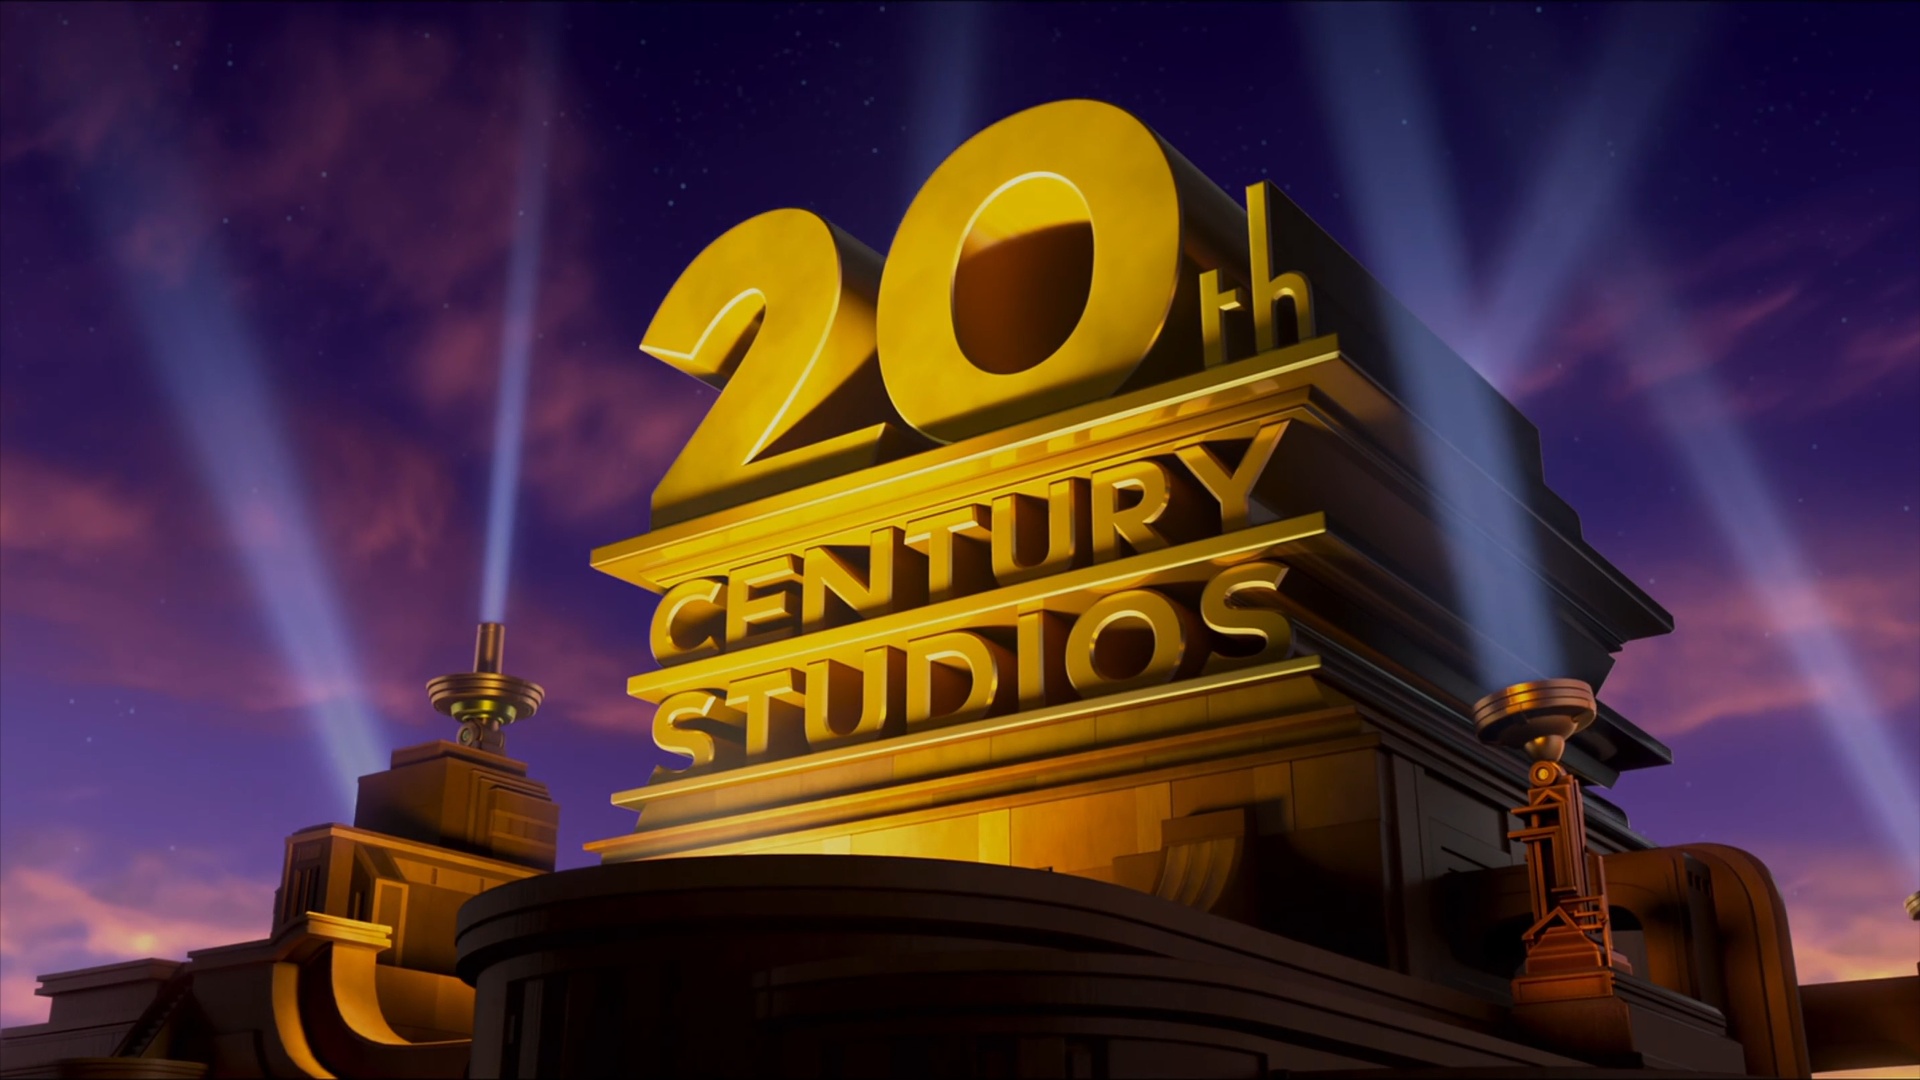 20th Century Studios - Wikipedia